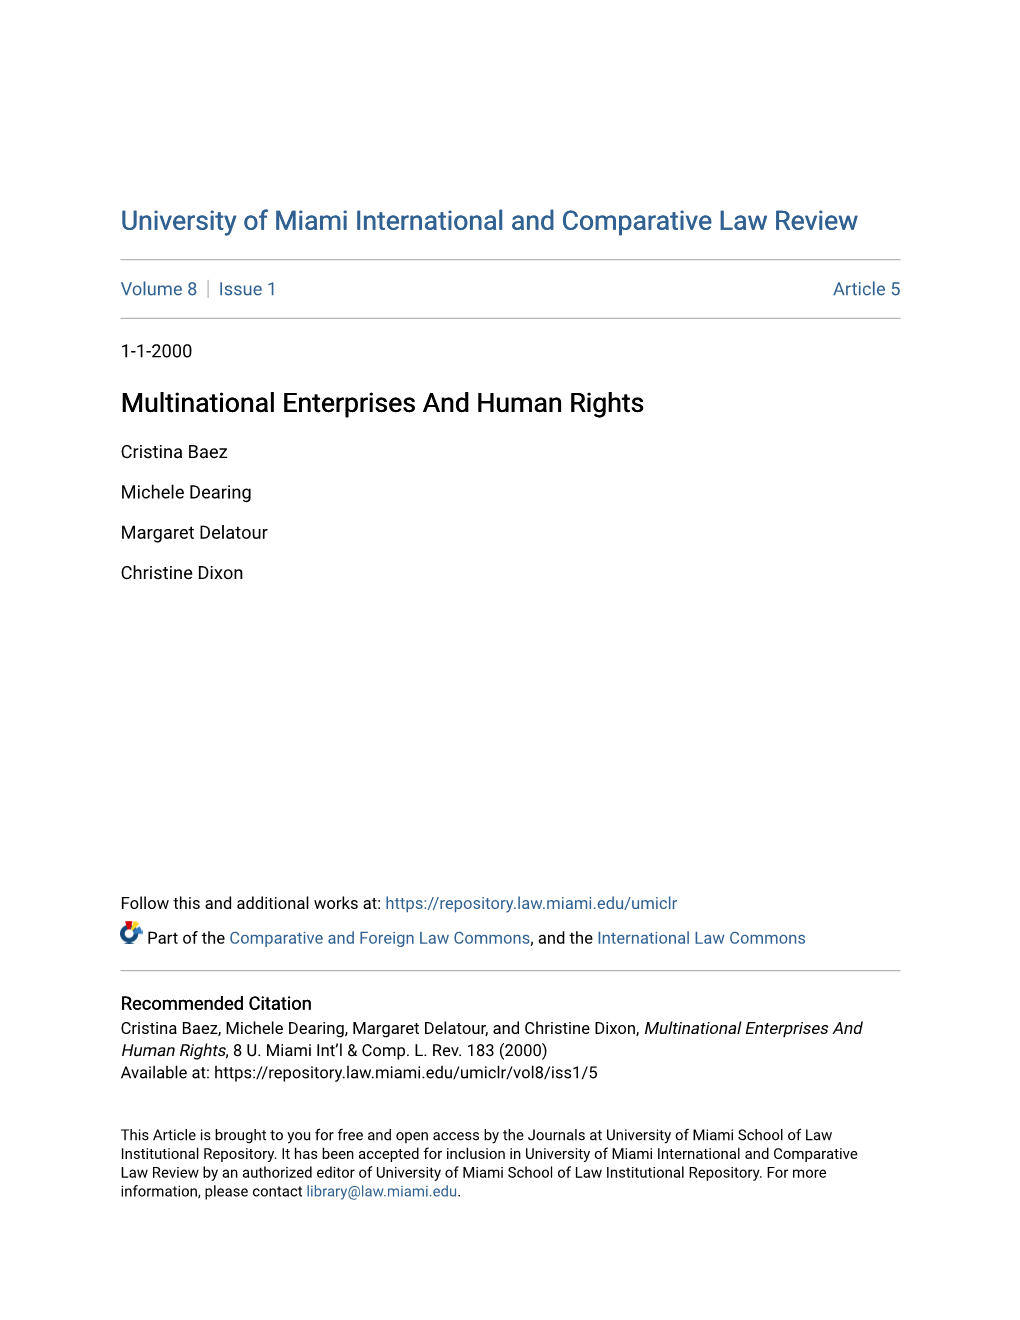 Multinational Enterprises and Human Rights